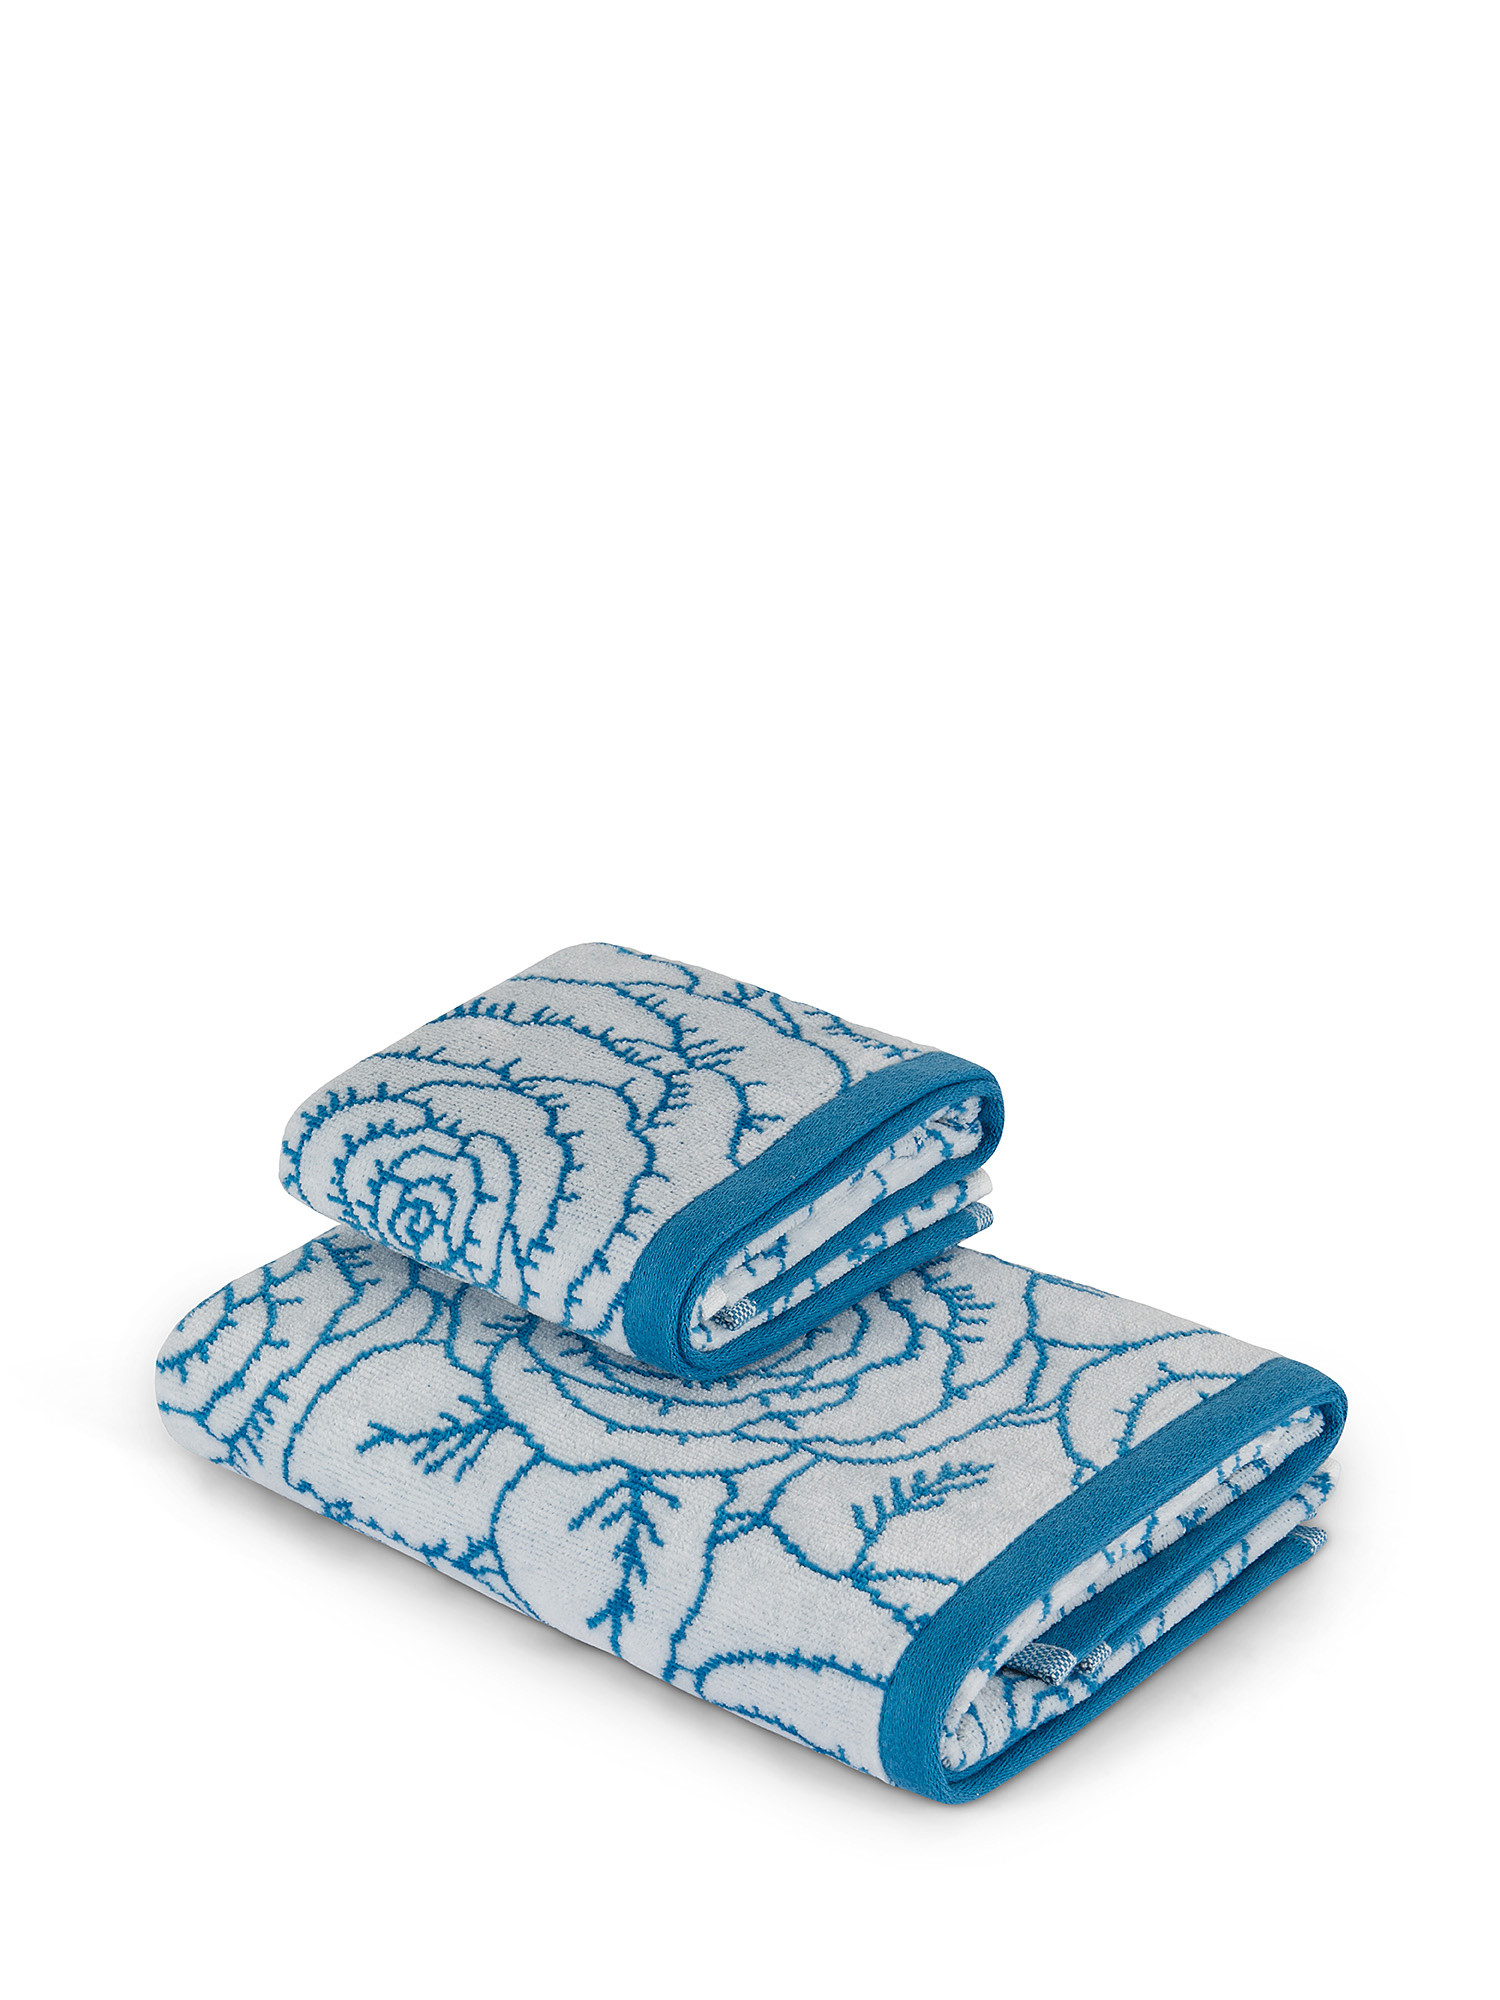 Asciugamano cotone velour motivo rose, Blu, large image number 0